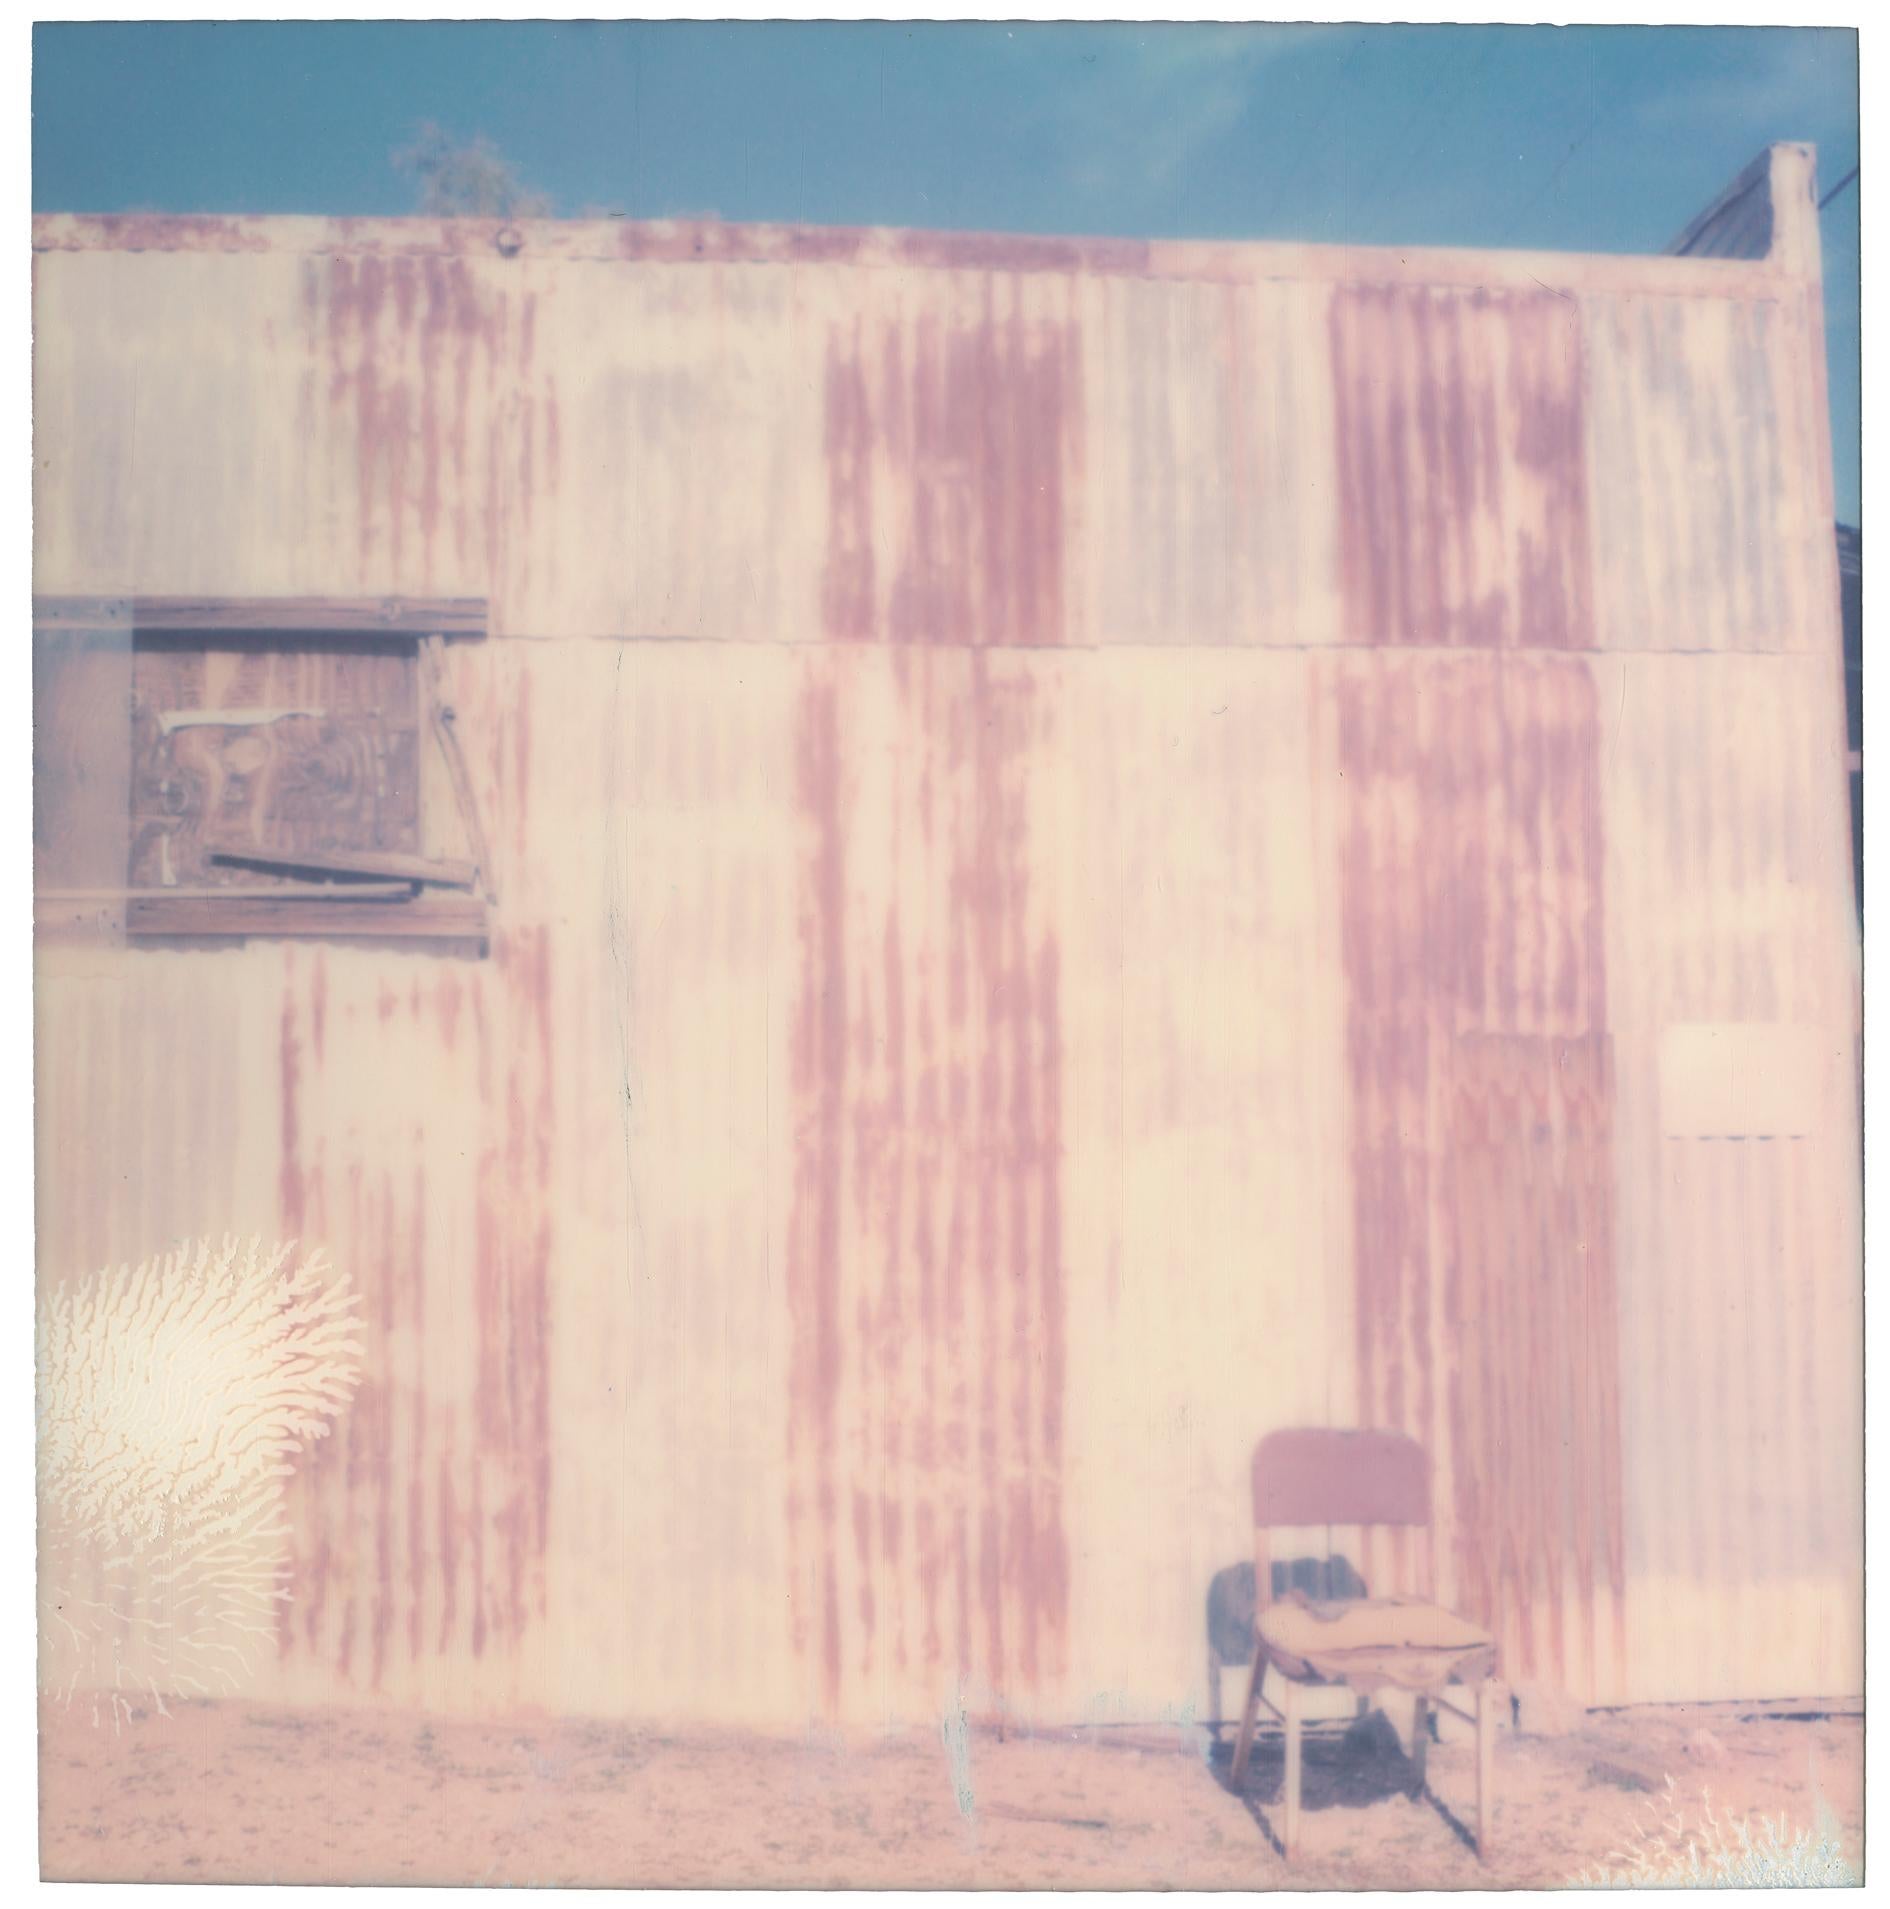 Stefanie Schneider Landscape Photograph - Red striped Shack (American Depression) - Contemporary, Polaroid, Landscape